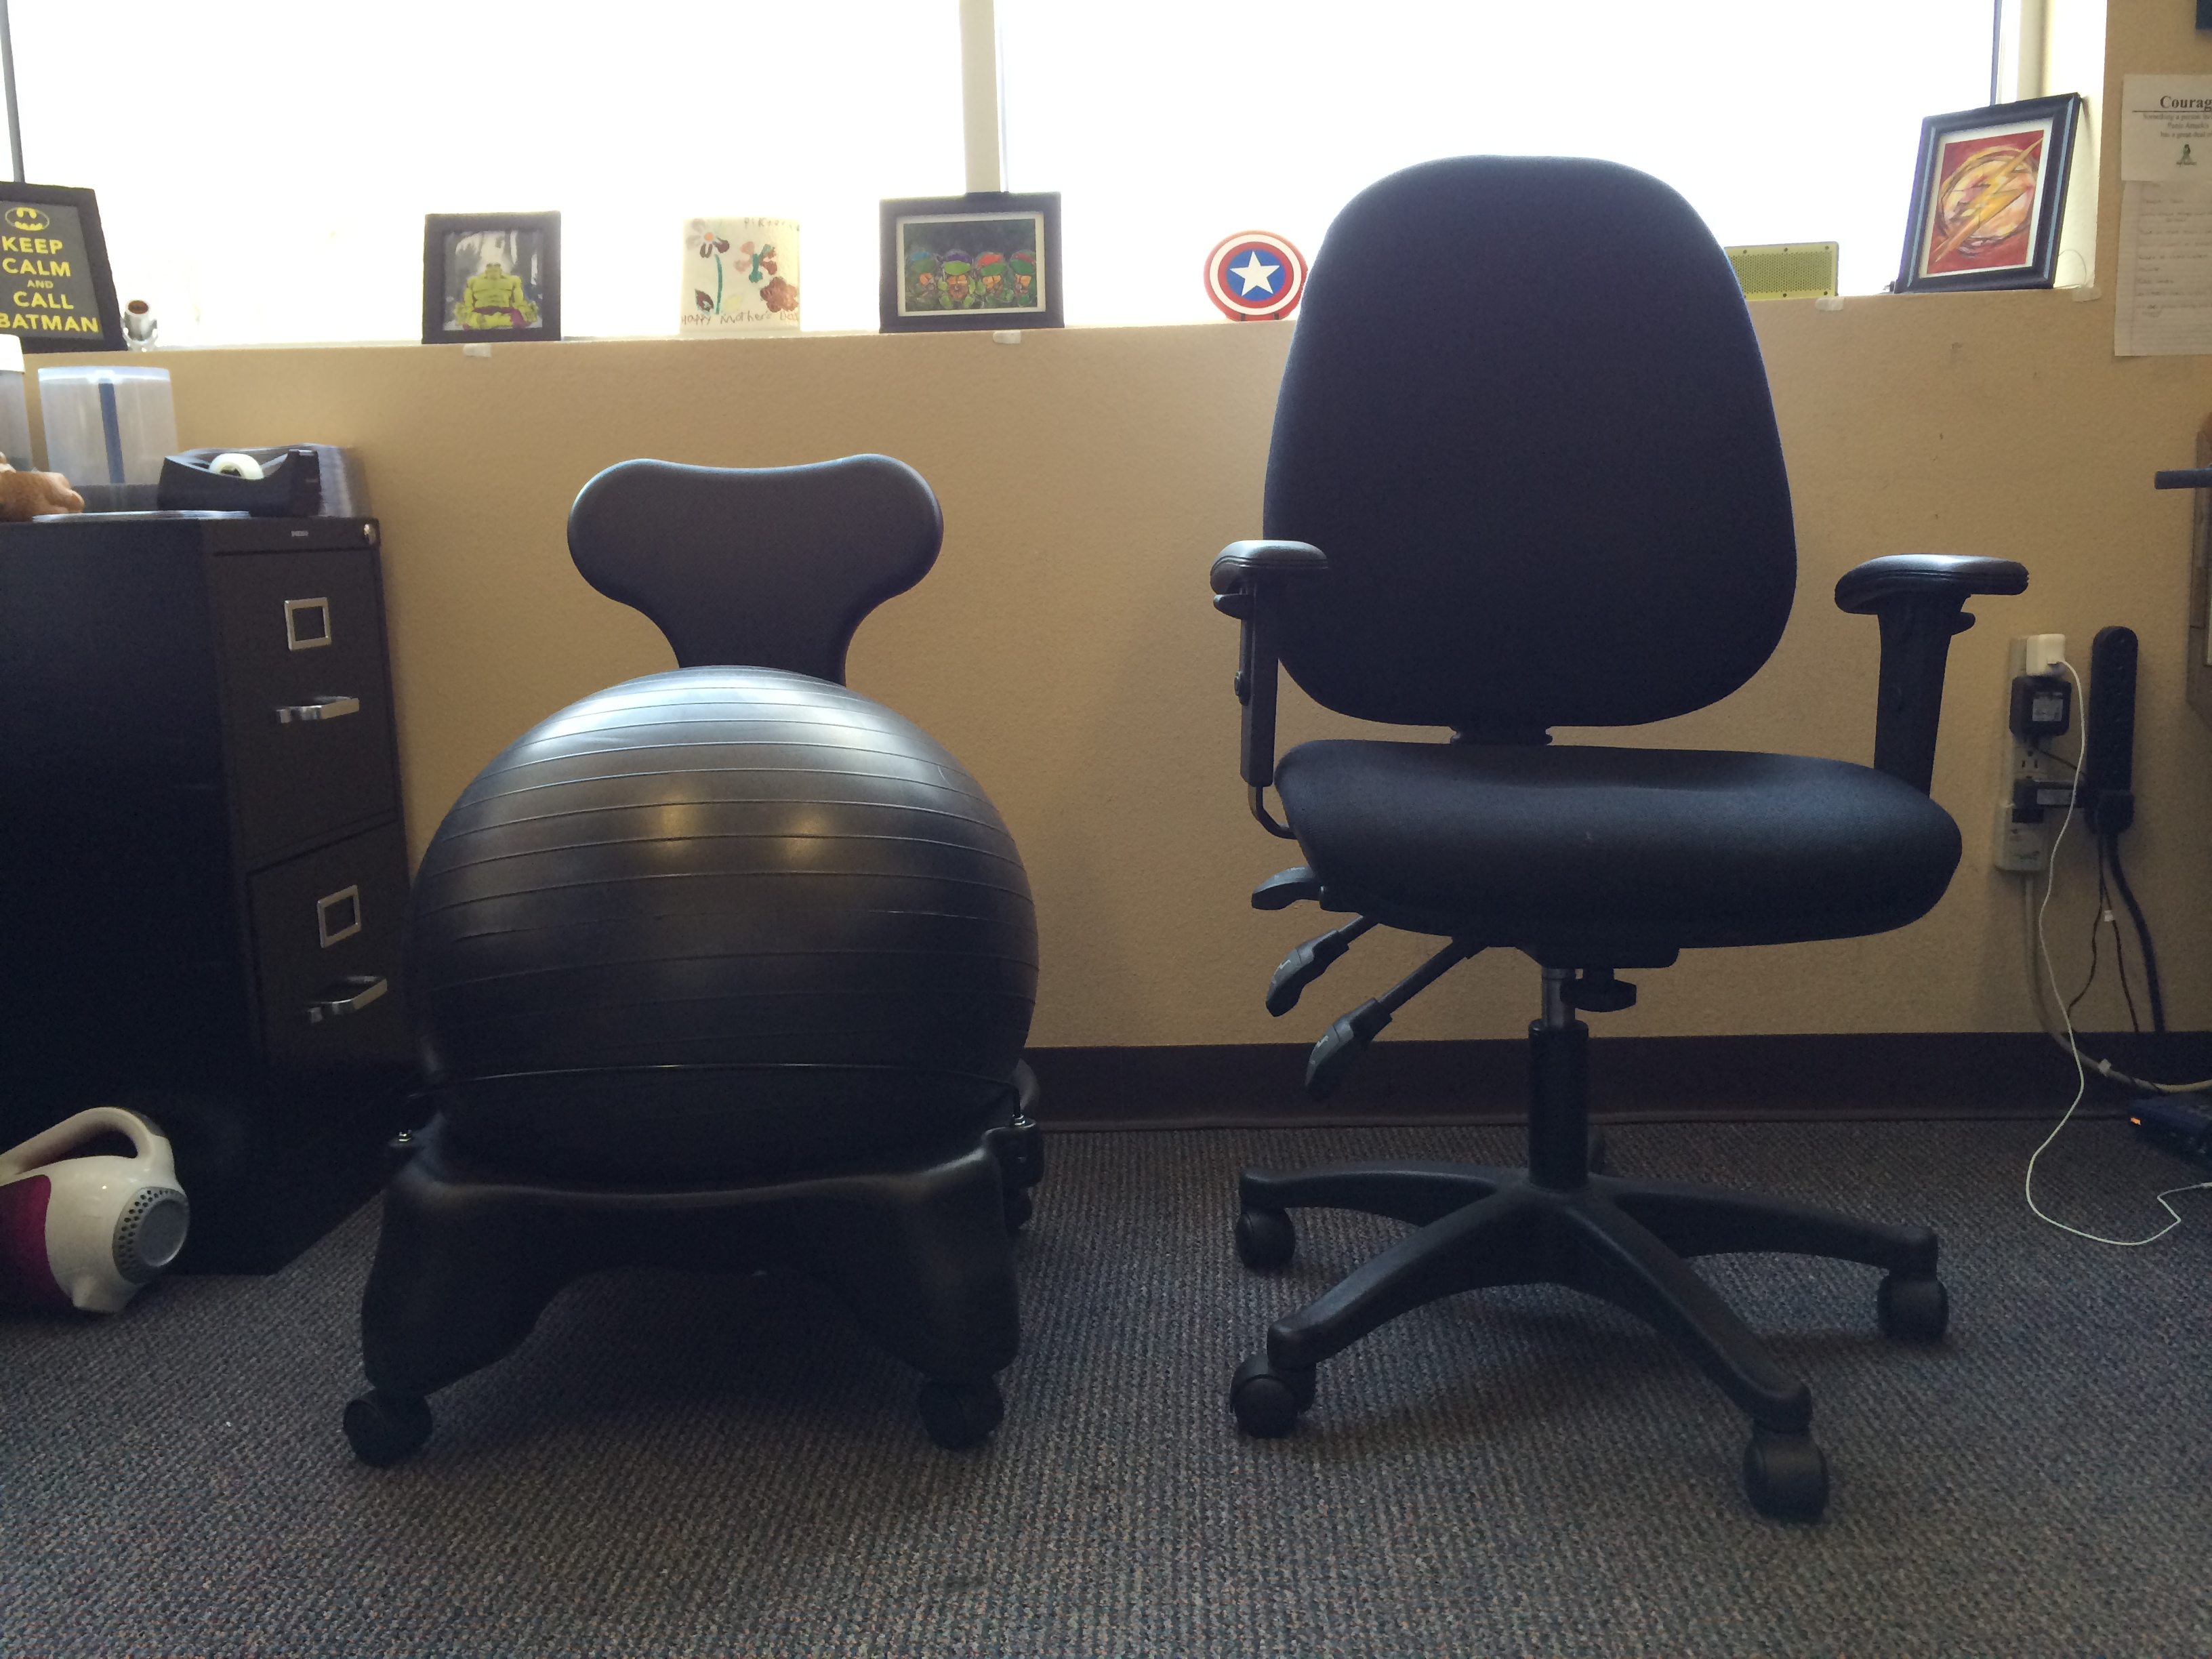 Left: BalanceBall chair, Right: My regular chair  Image: Dakster Sullivan